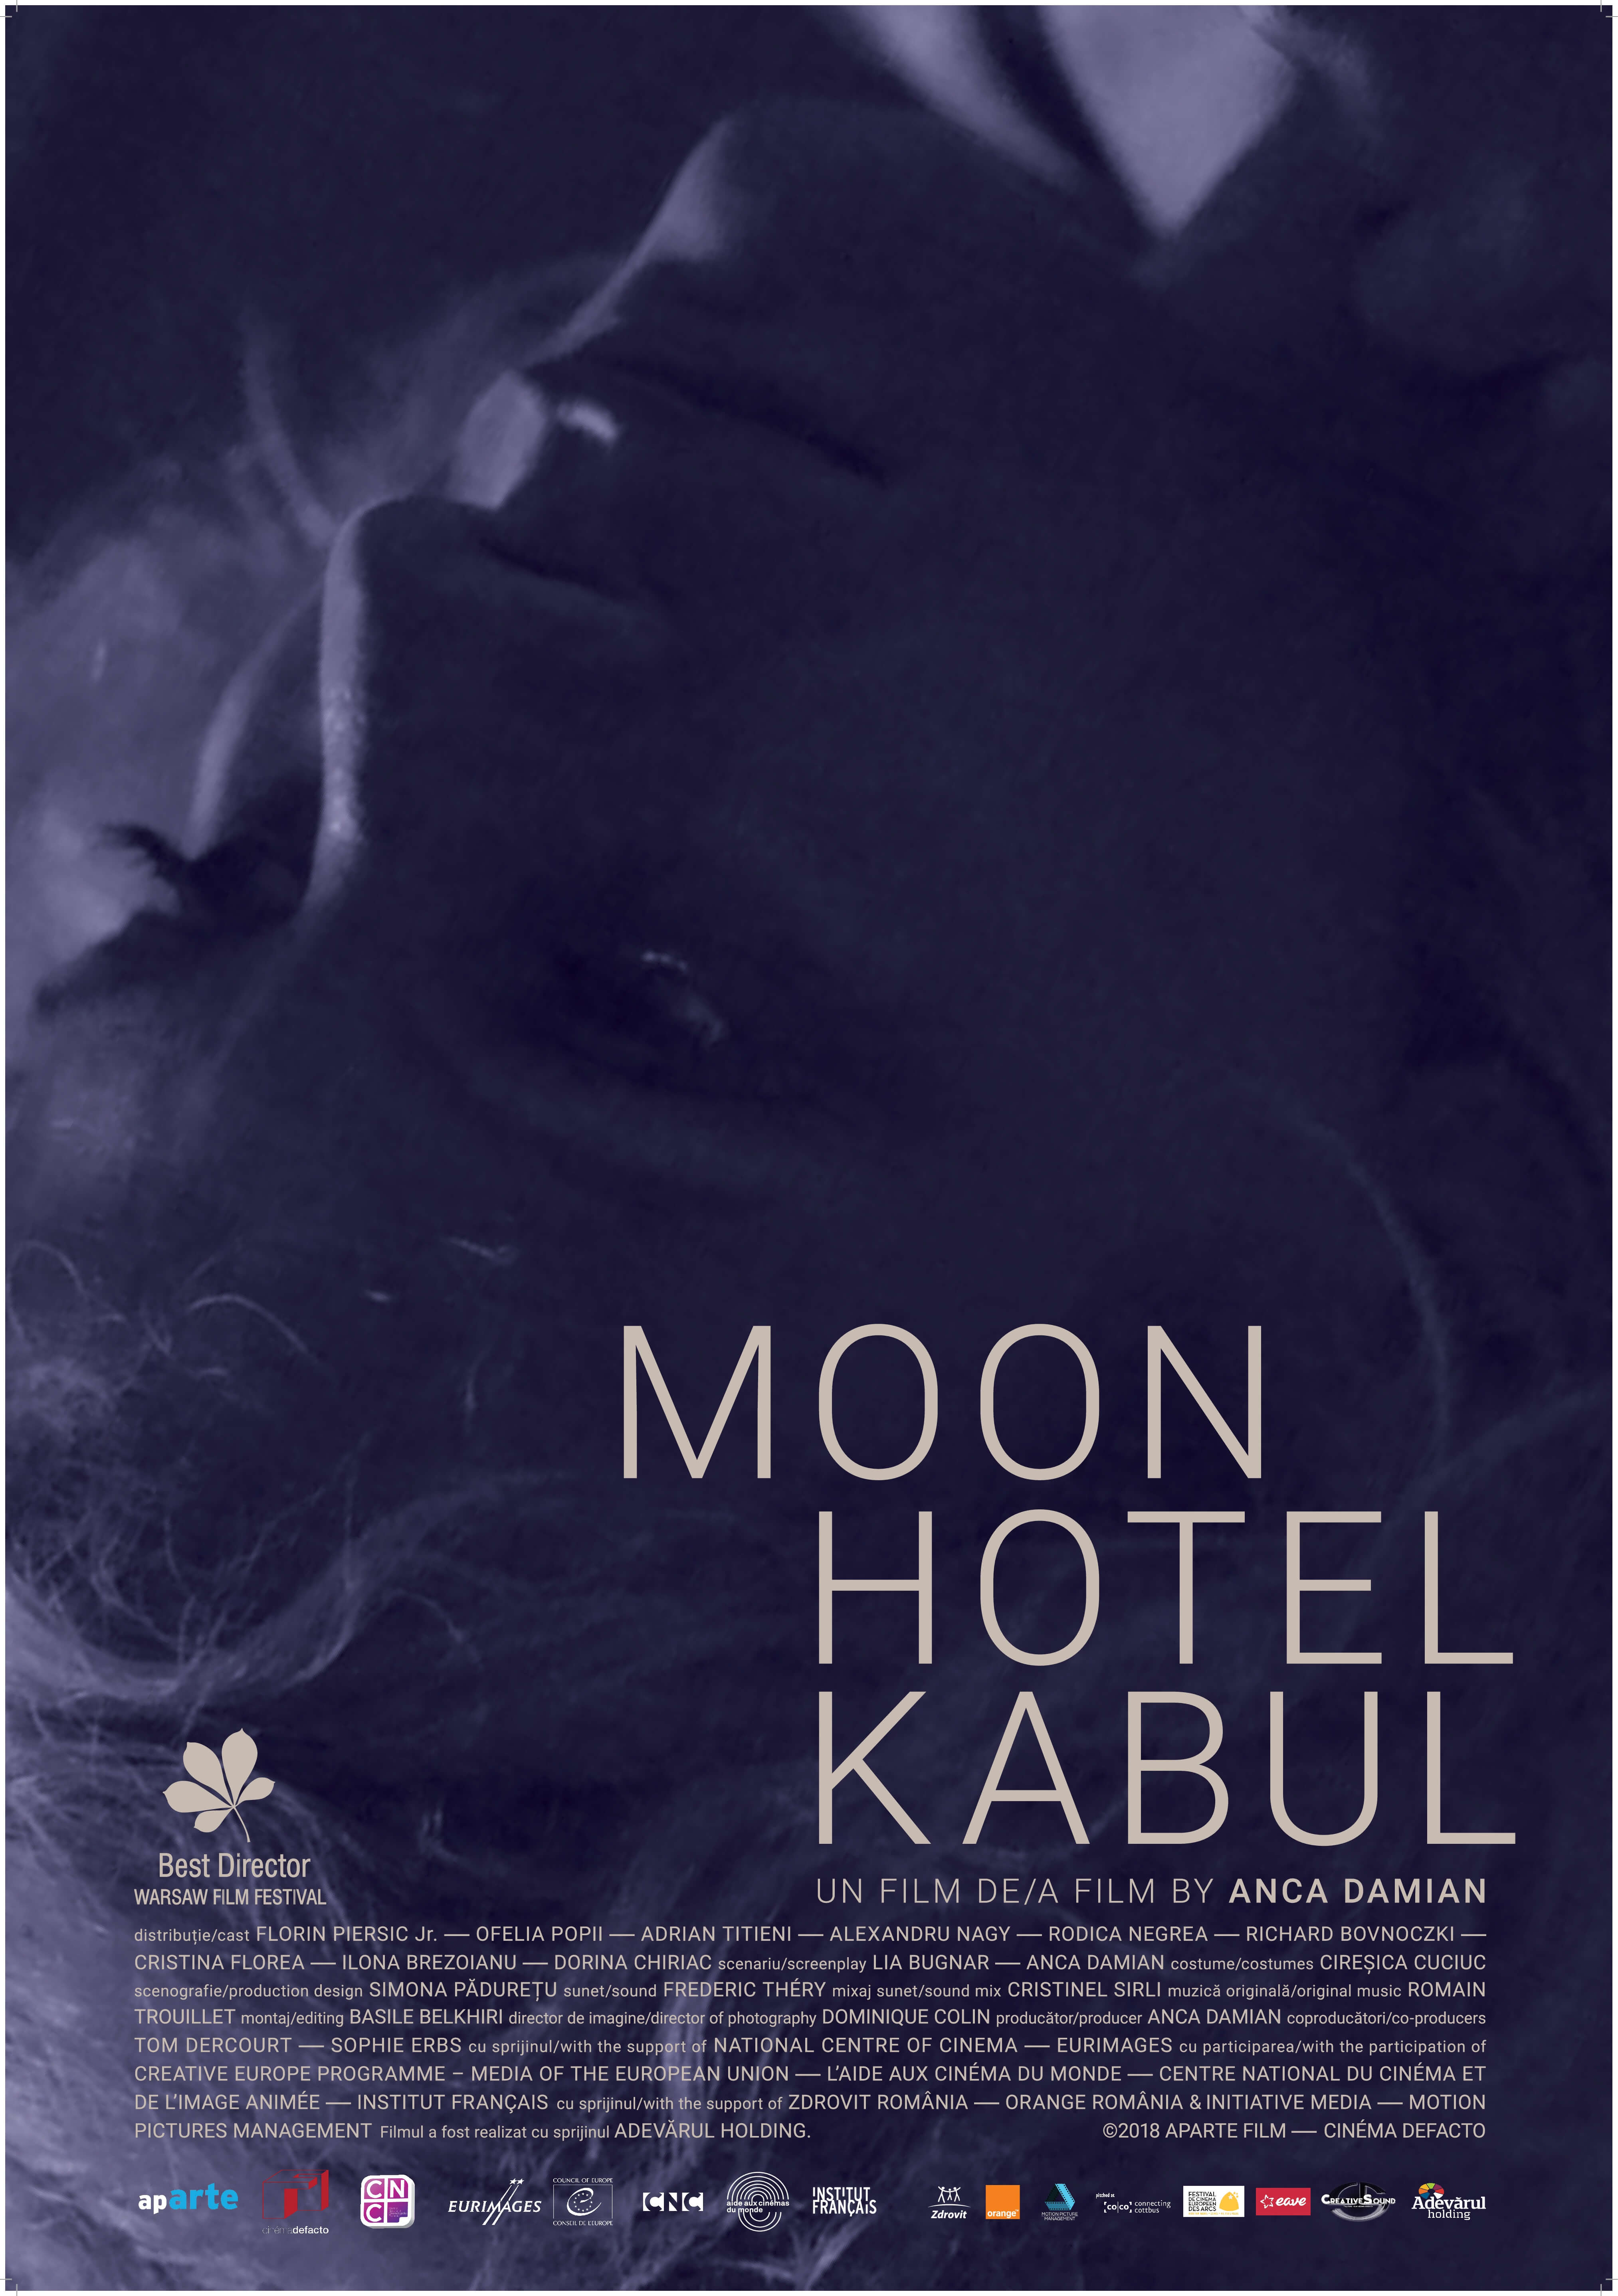 Moon Hotel Kabul poster